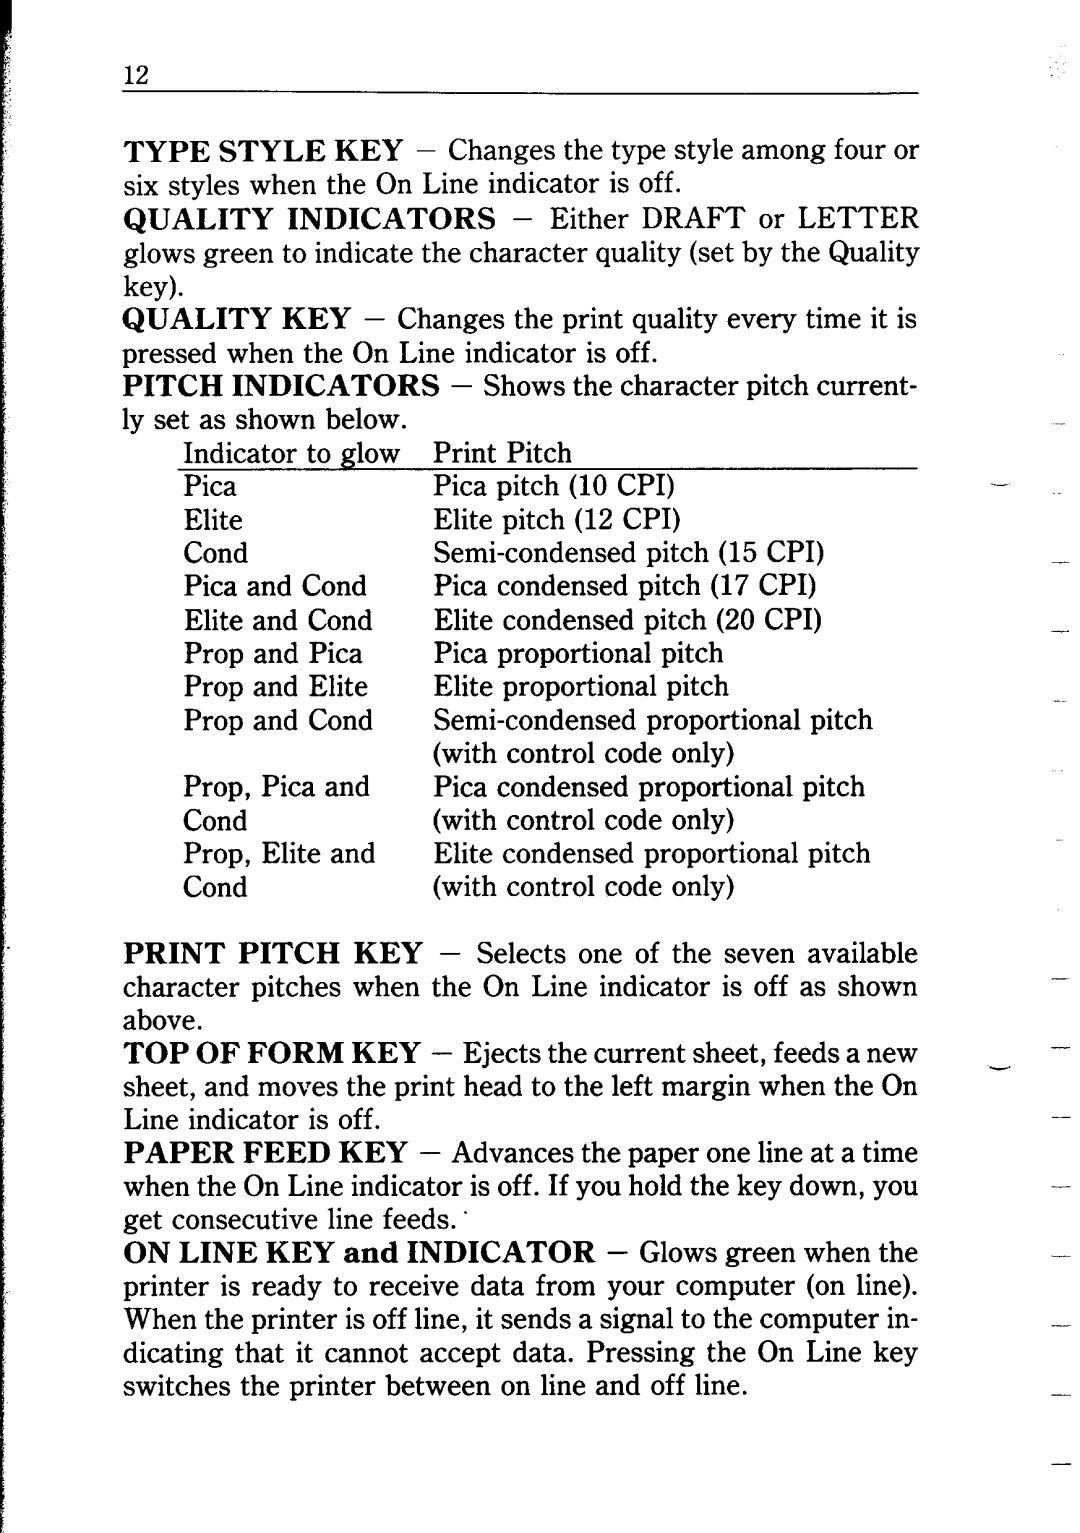 Star Micronics NB24-10/15 user manual Top Of Form Key, current 